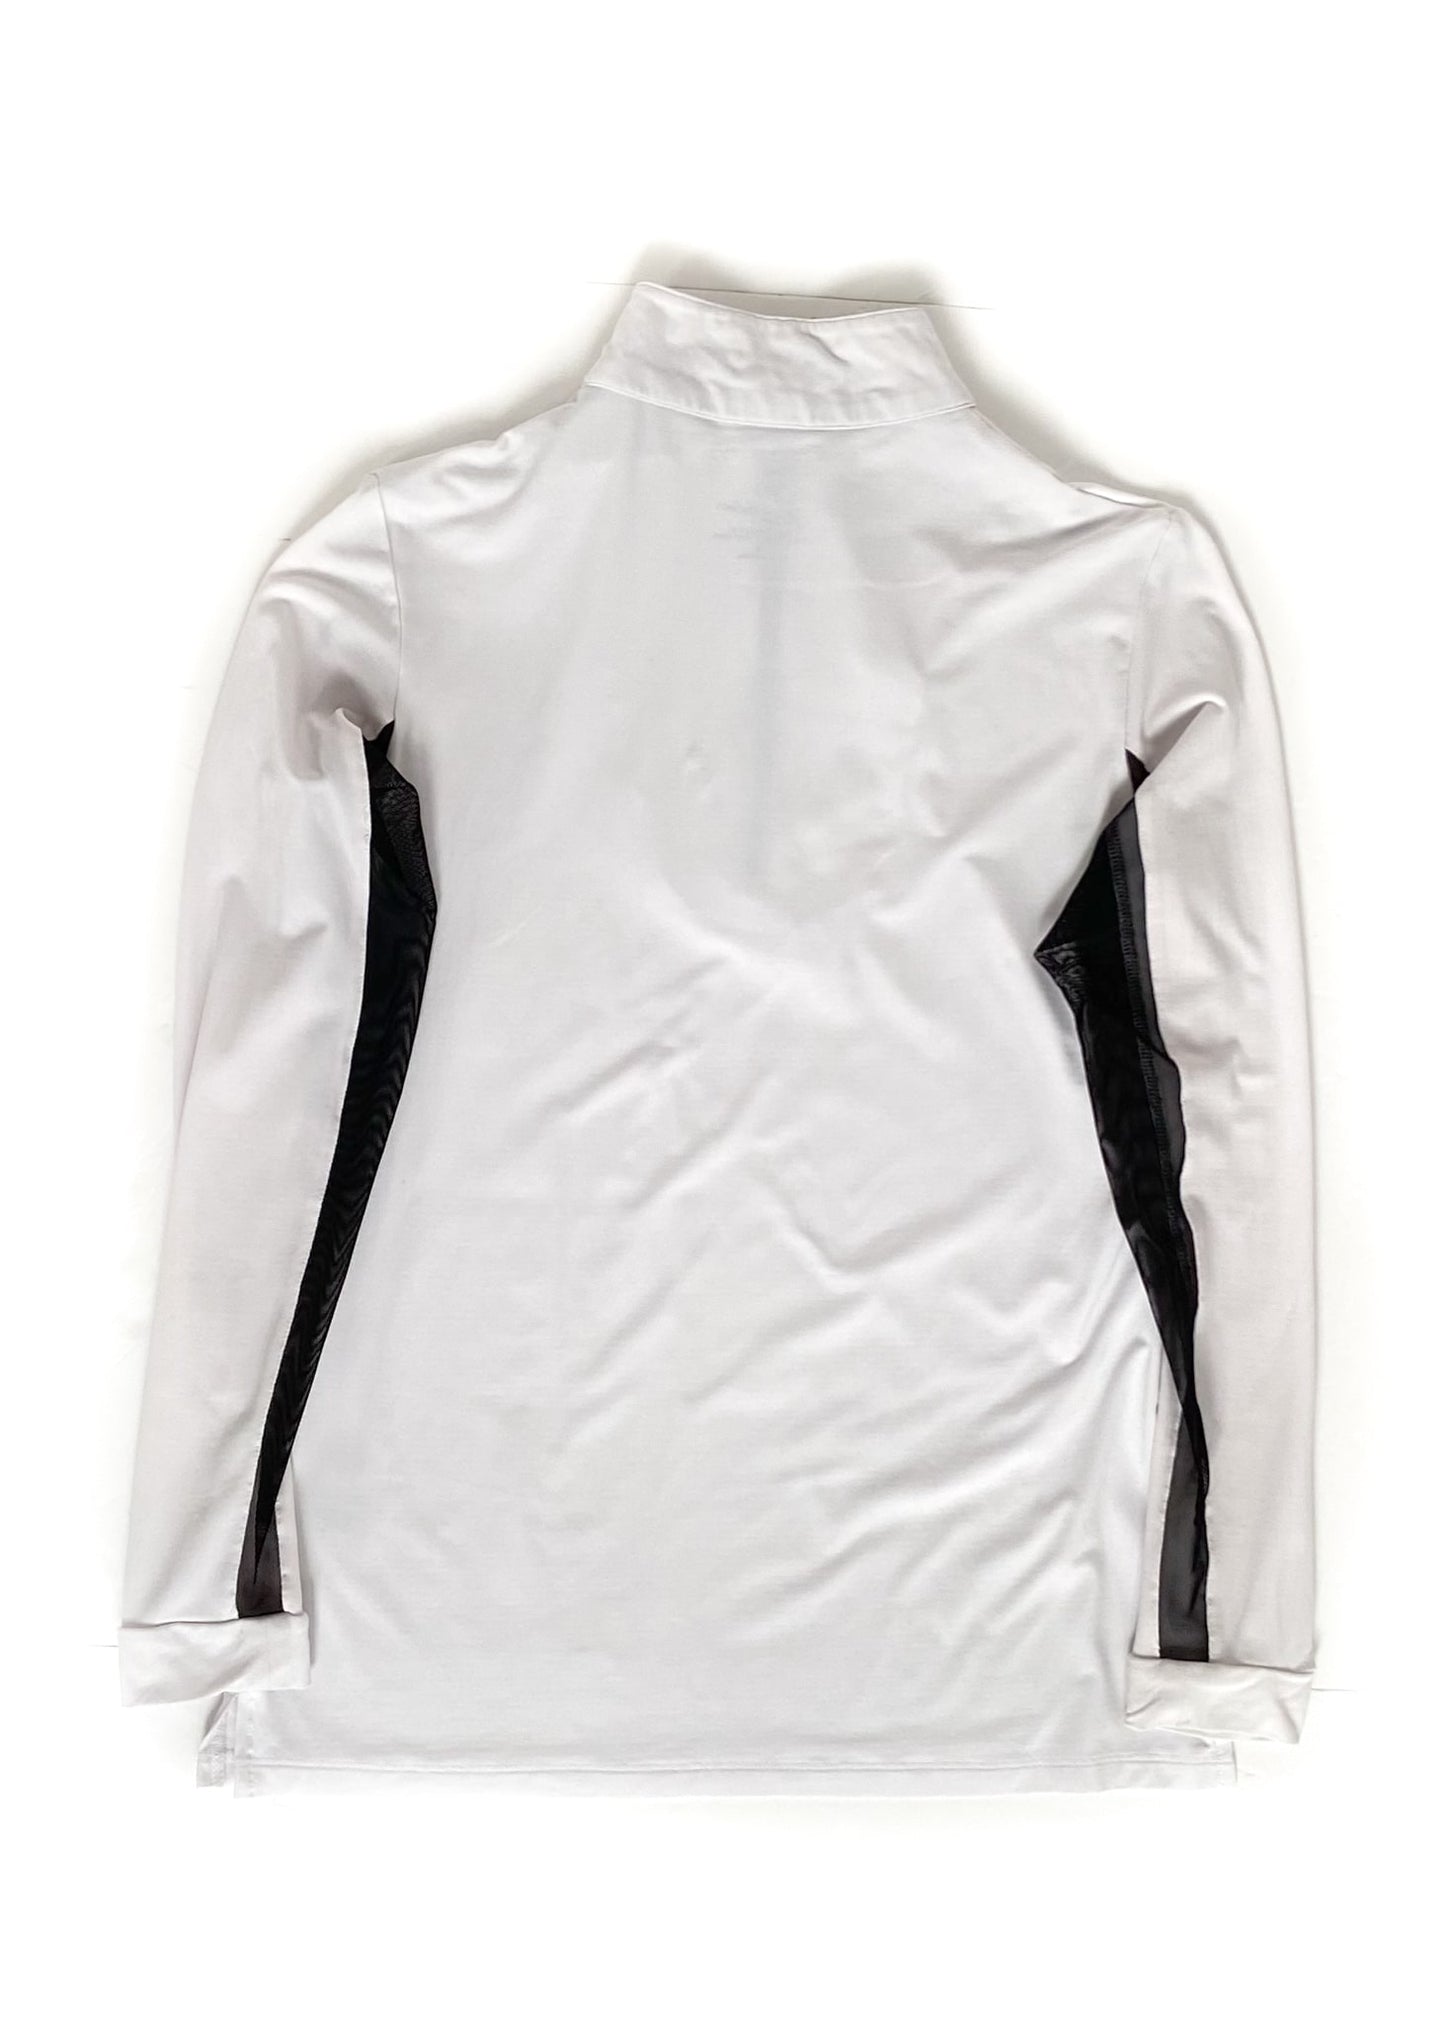 Tailored Sportsman Long Sleeve Icefil Shirt - White - Women's Small